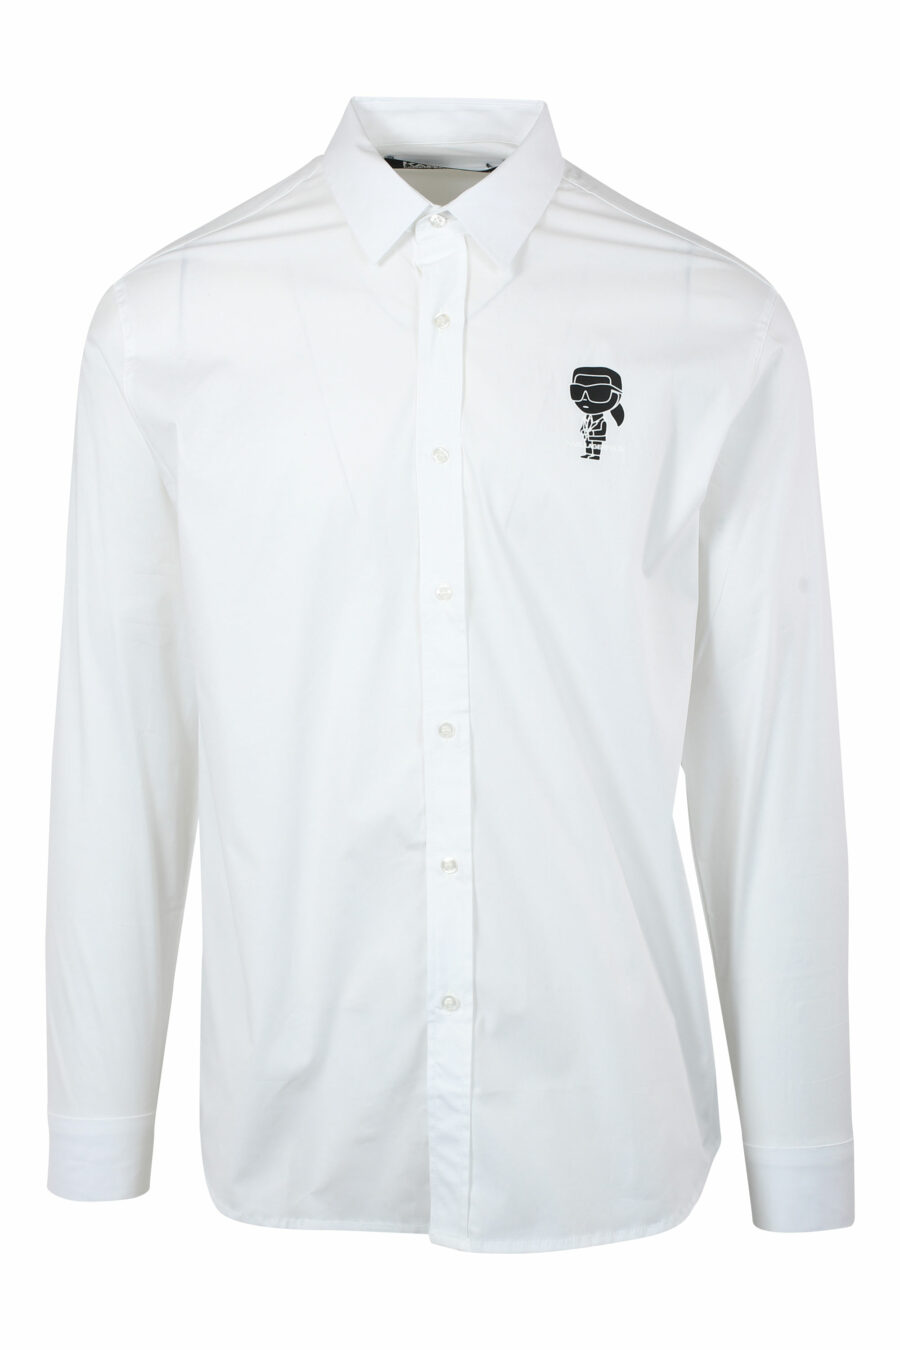 Camisa blanca con minilogo "karl" en silueta negro - IMG 9681